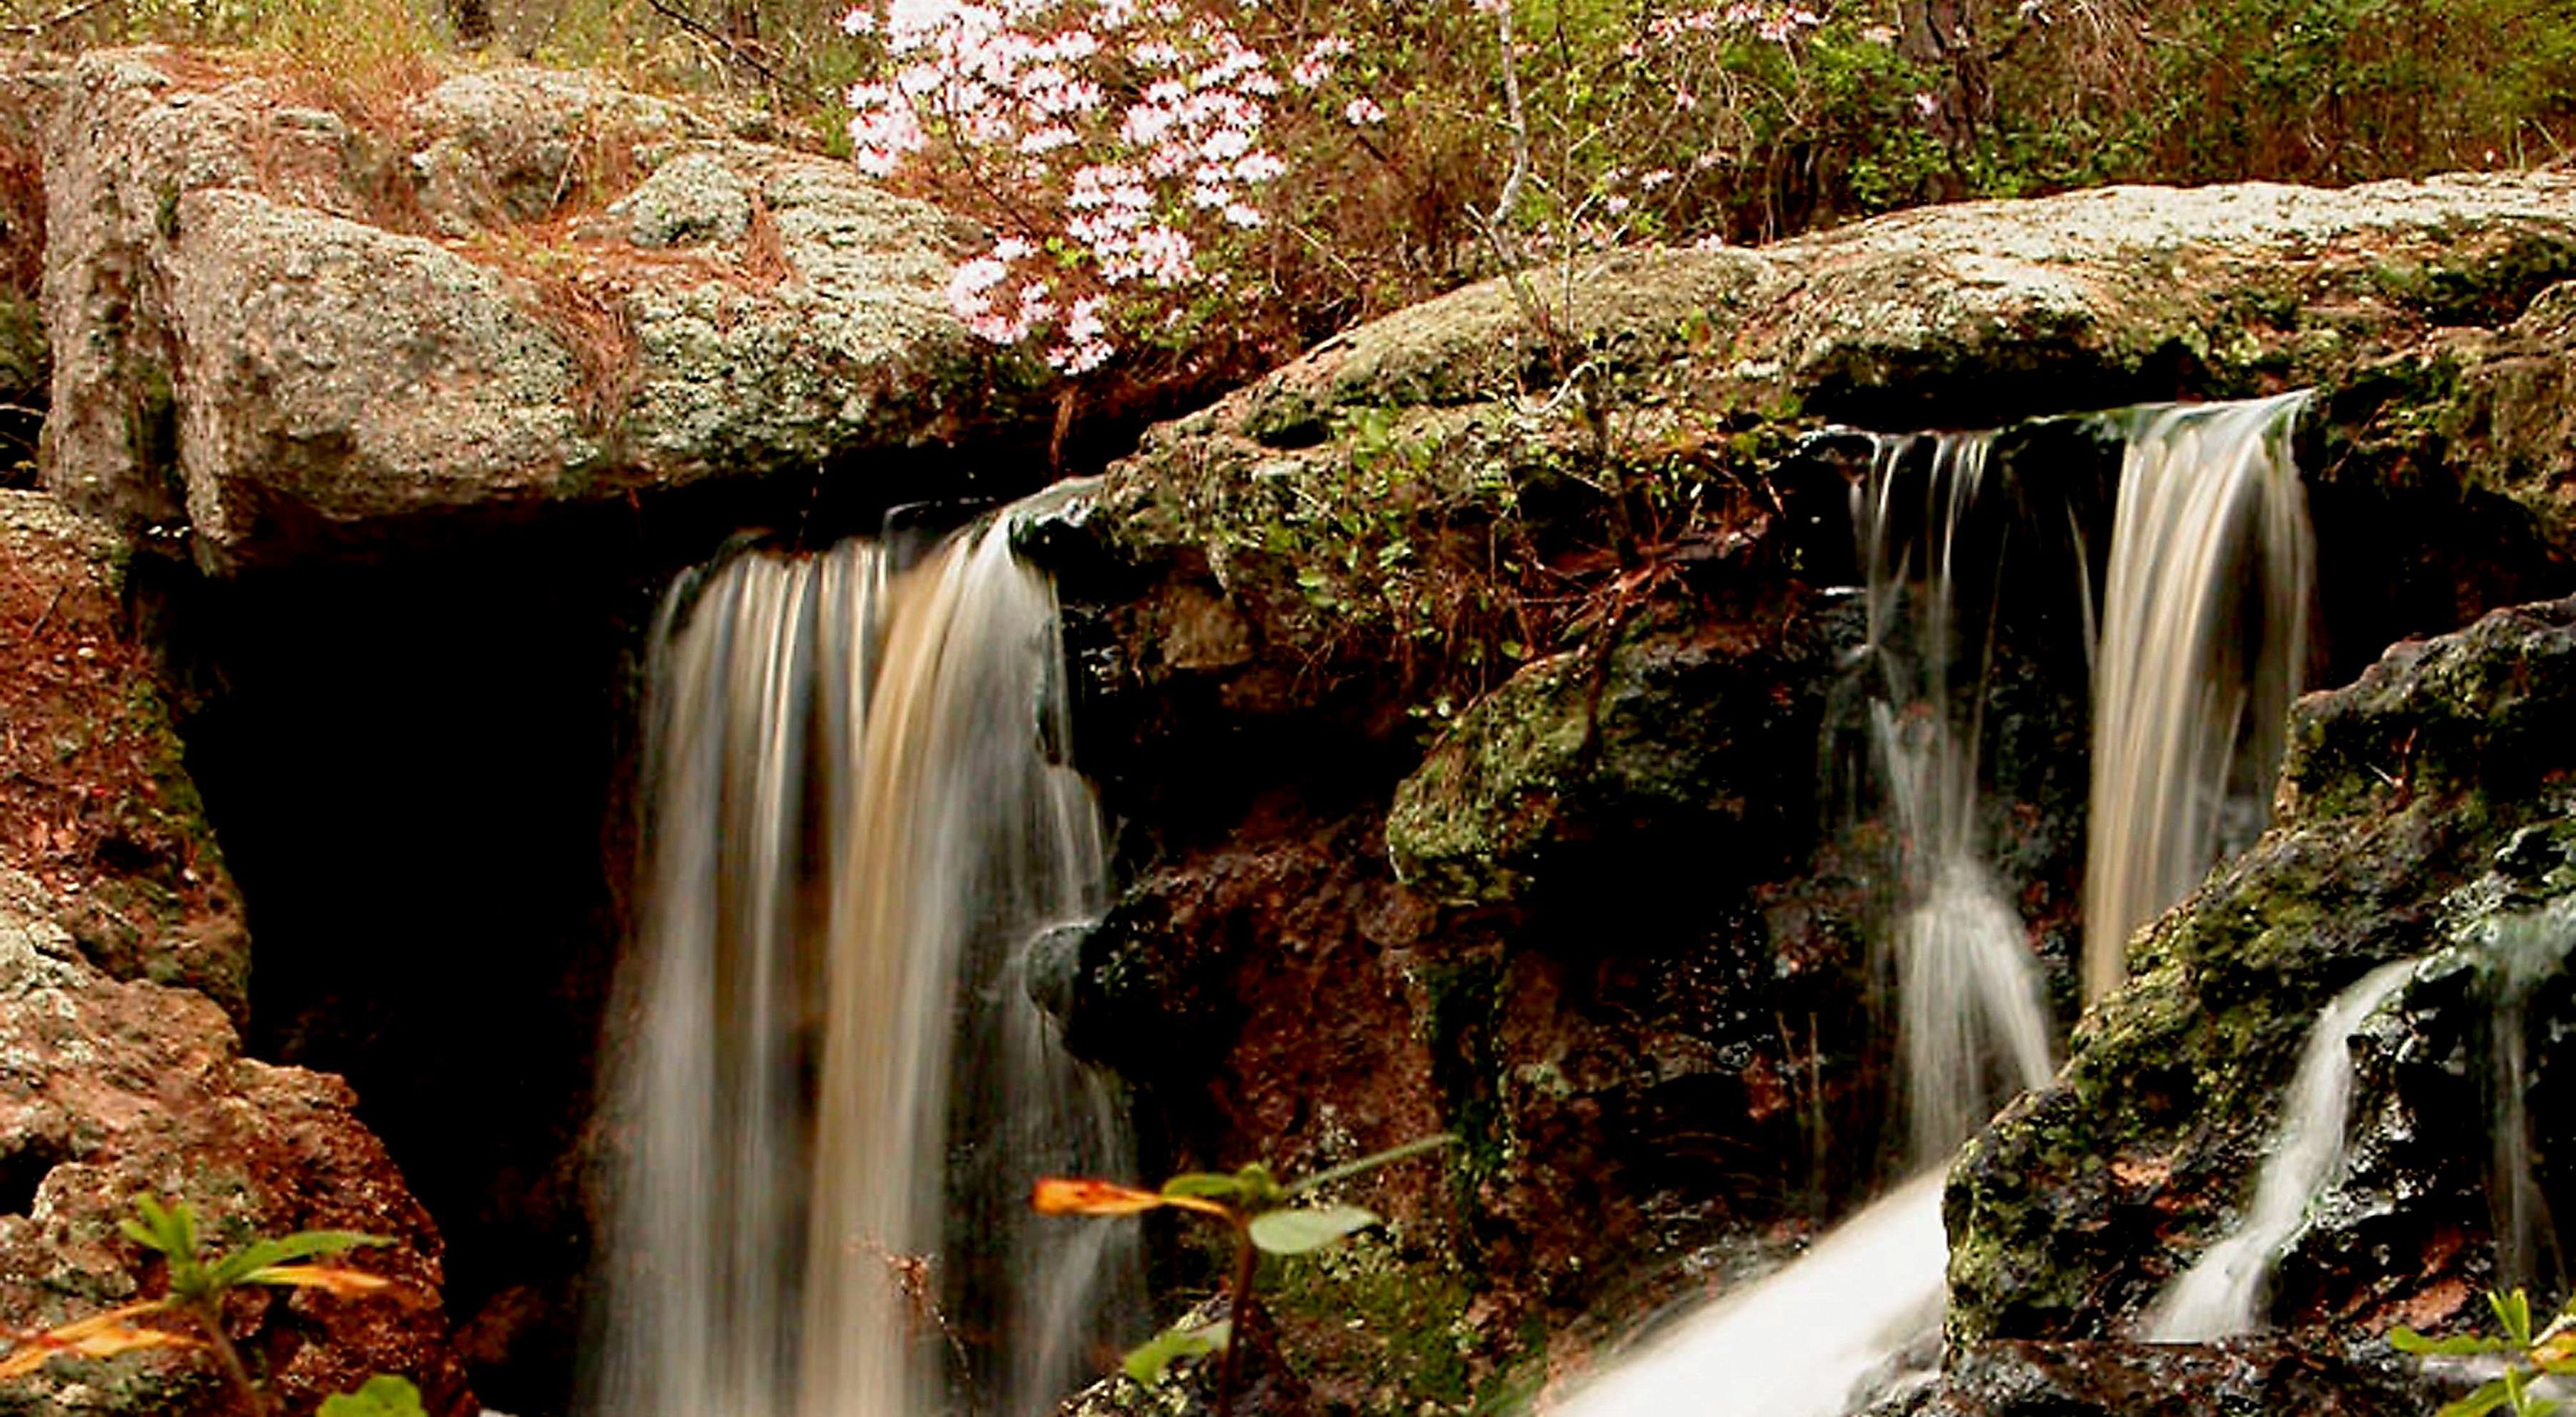 Waterfalls cascade down moss covered rocks.